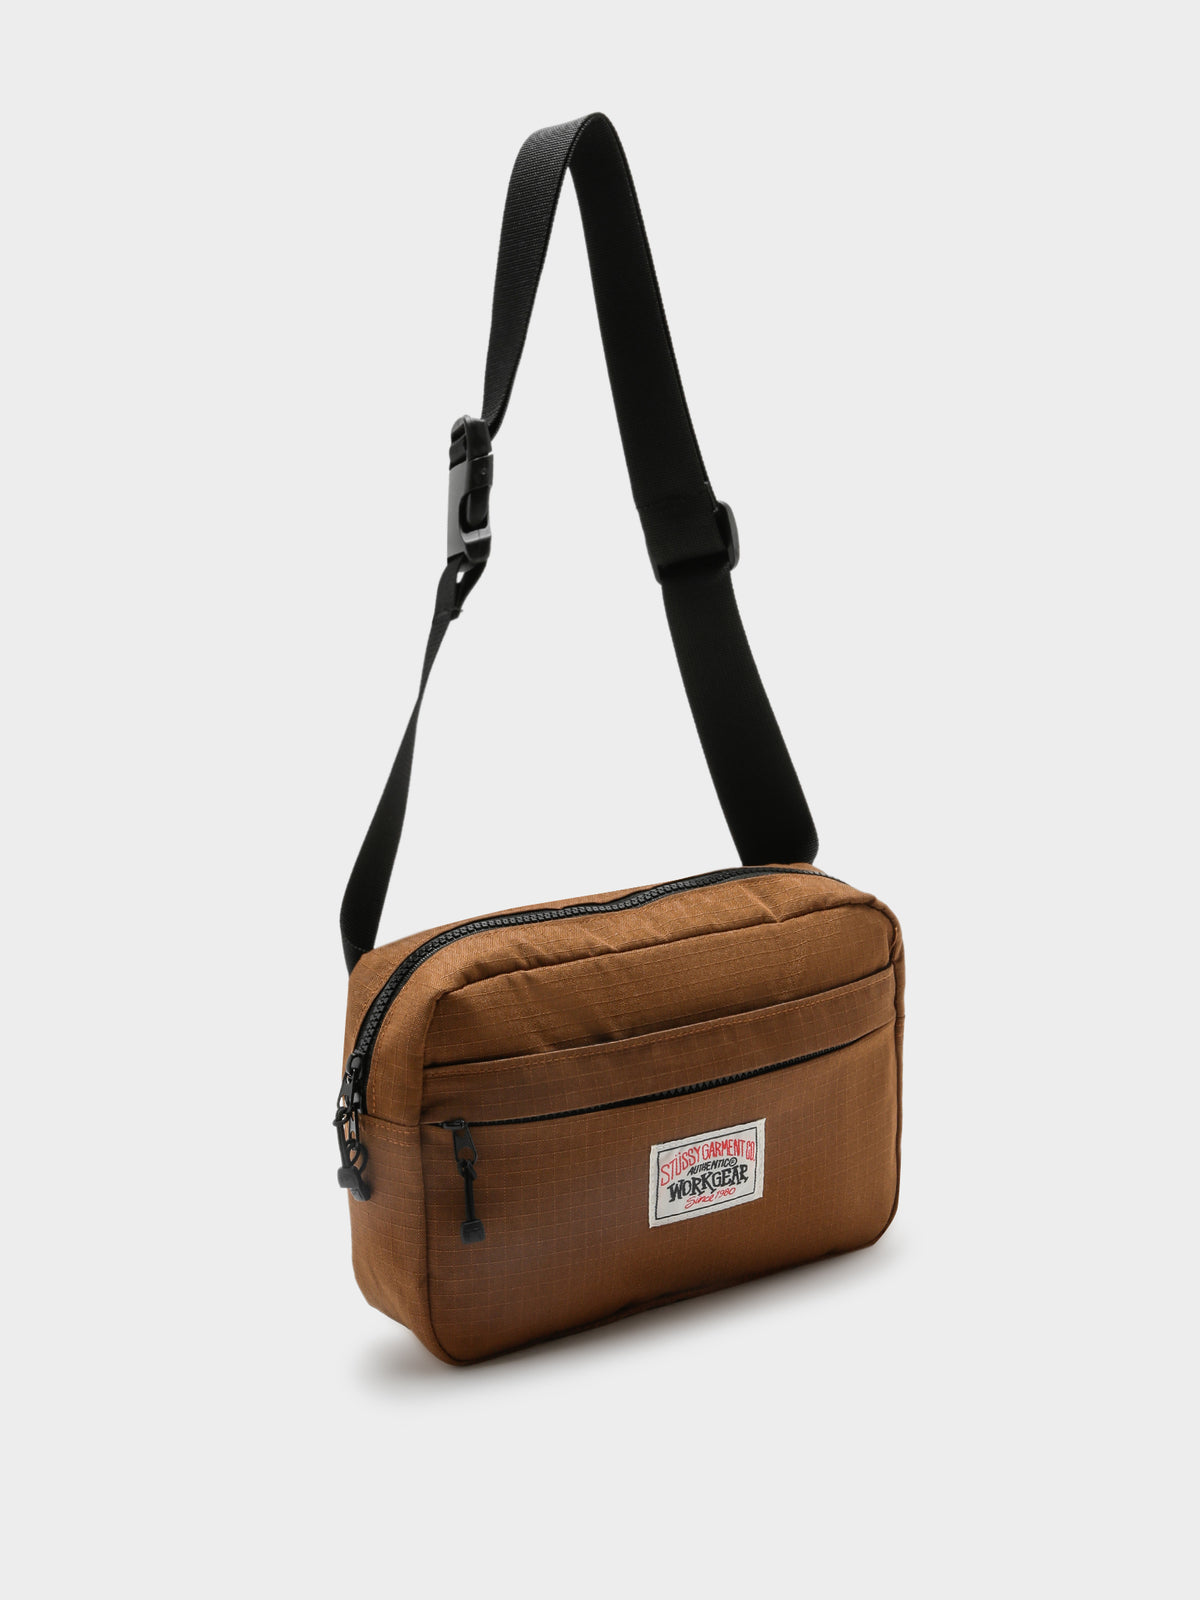 Workgear Shoulder Bag in Chocolate Brown